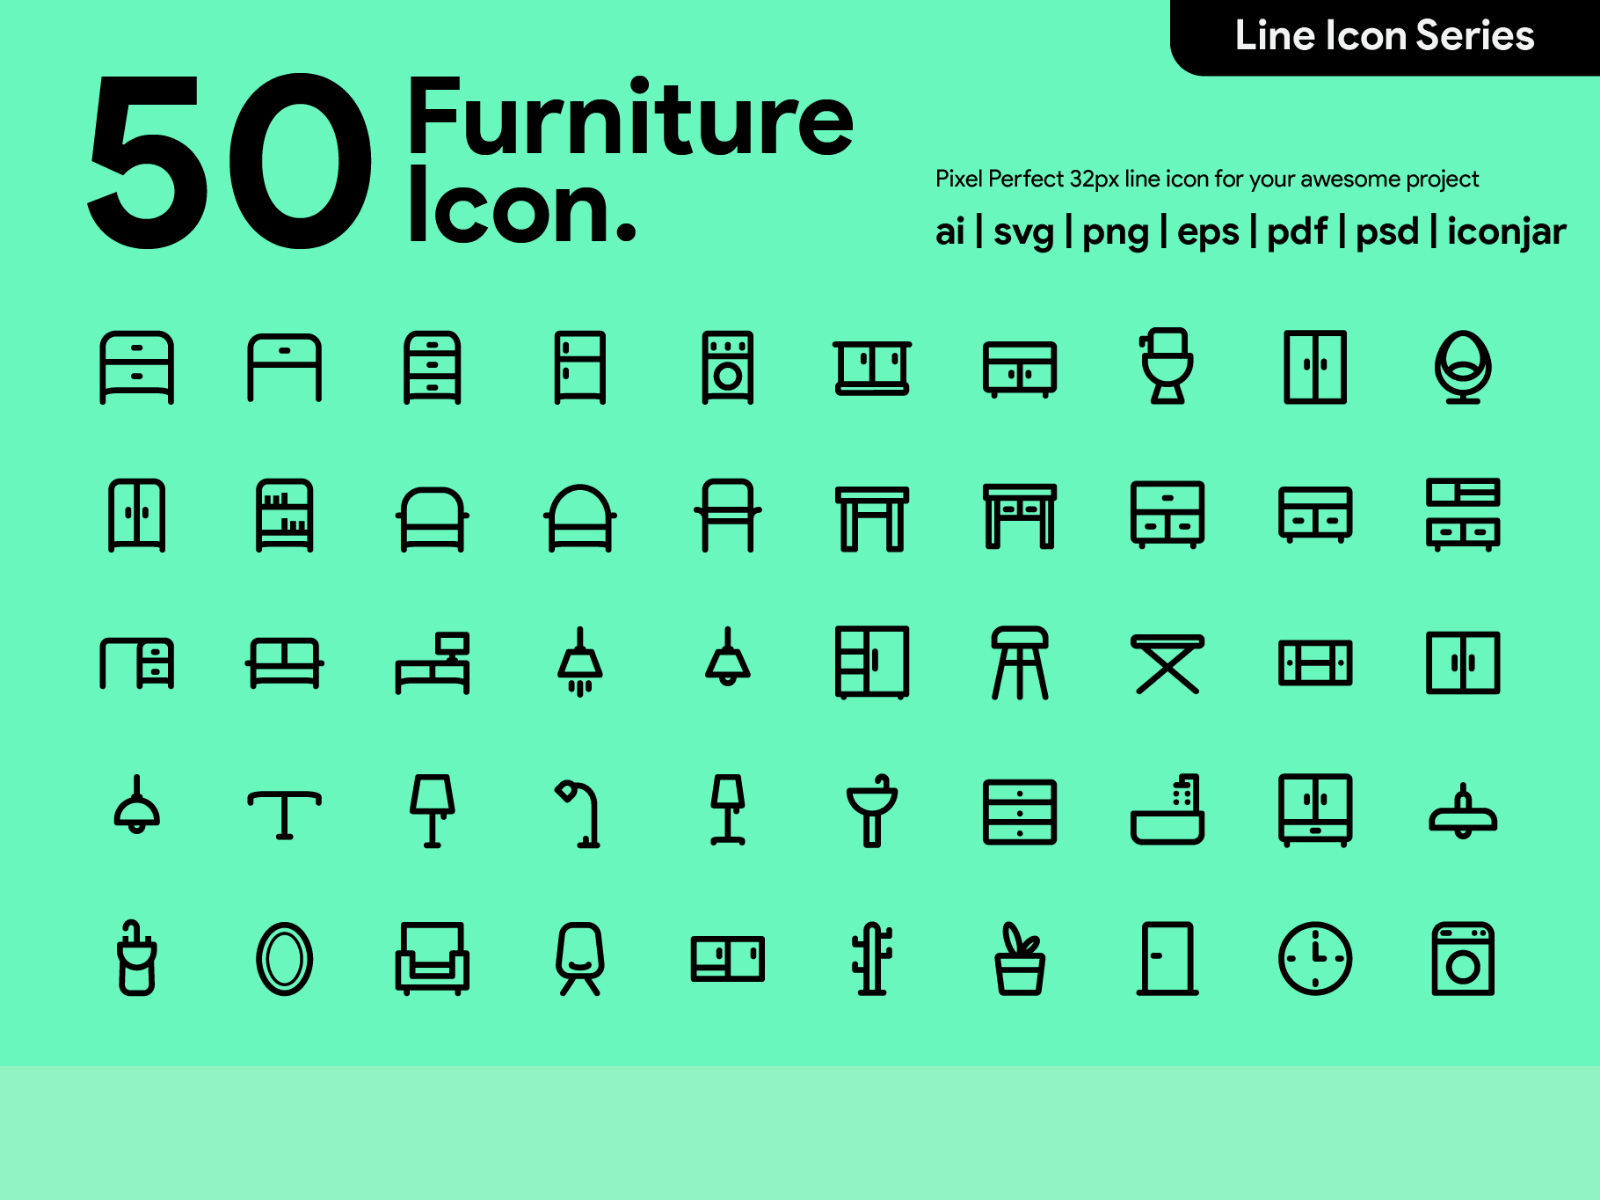 App icons design idea #260: Kawaicon - 50 Furniture Line icon